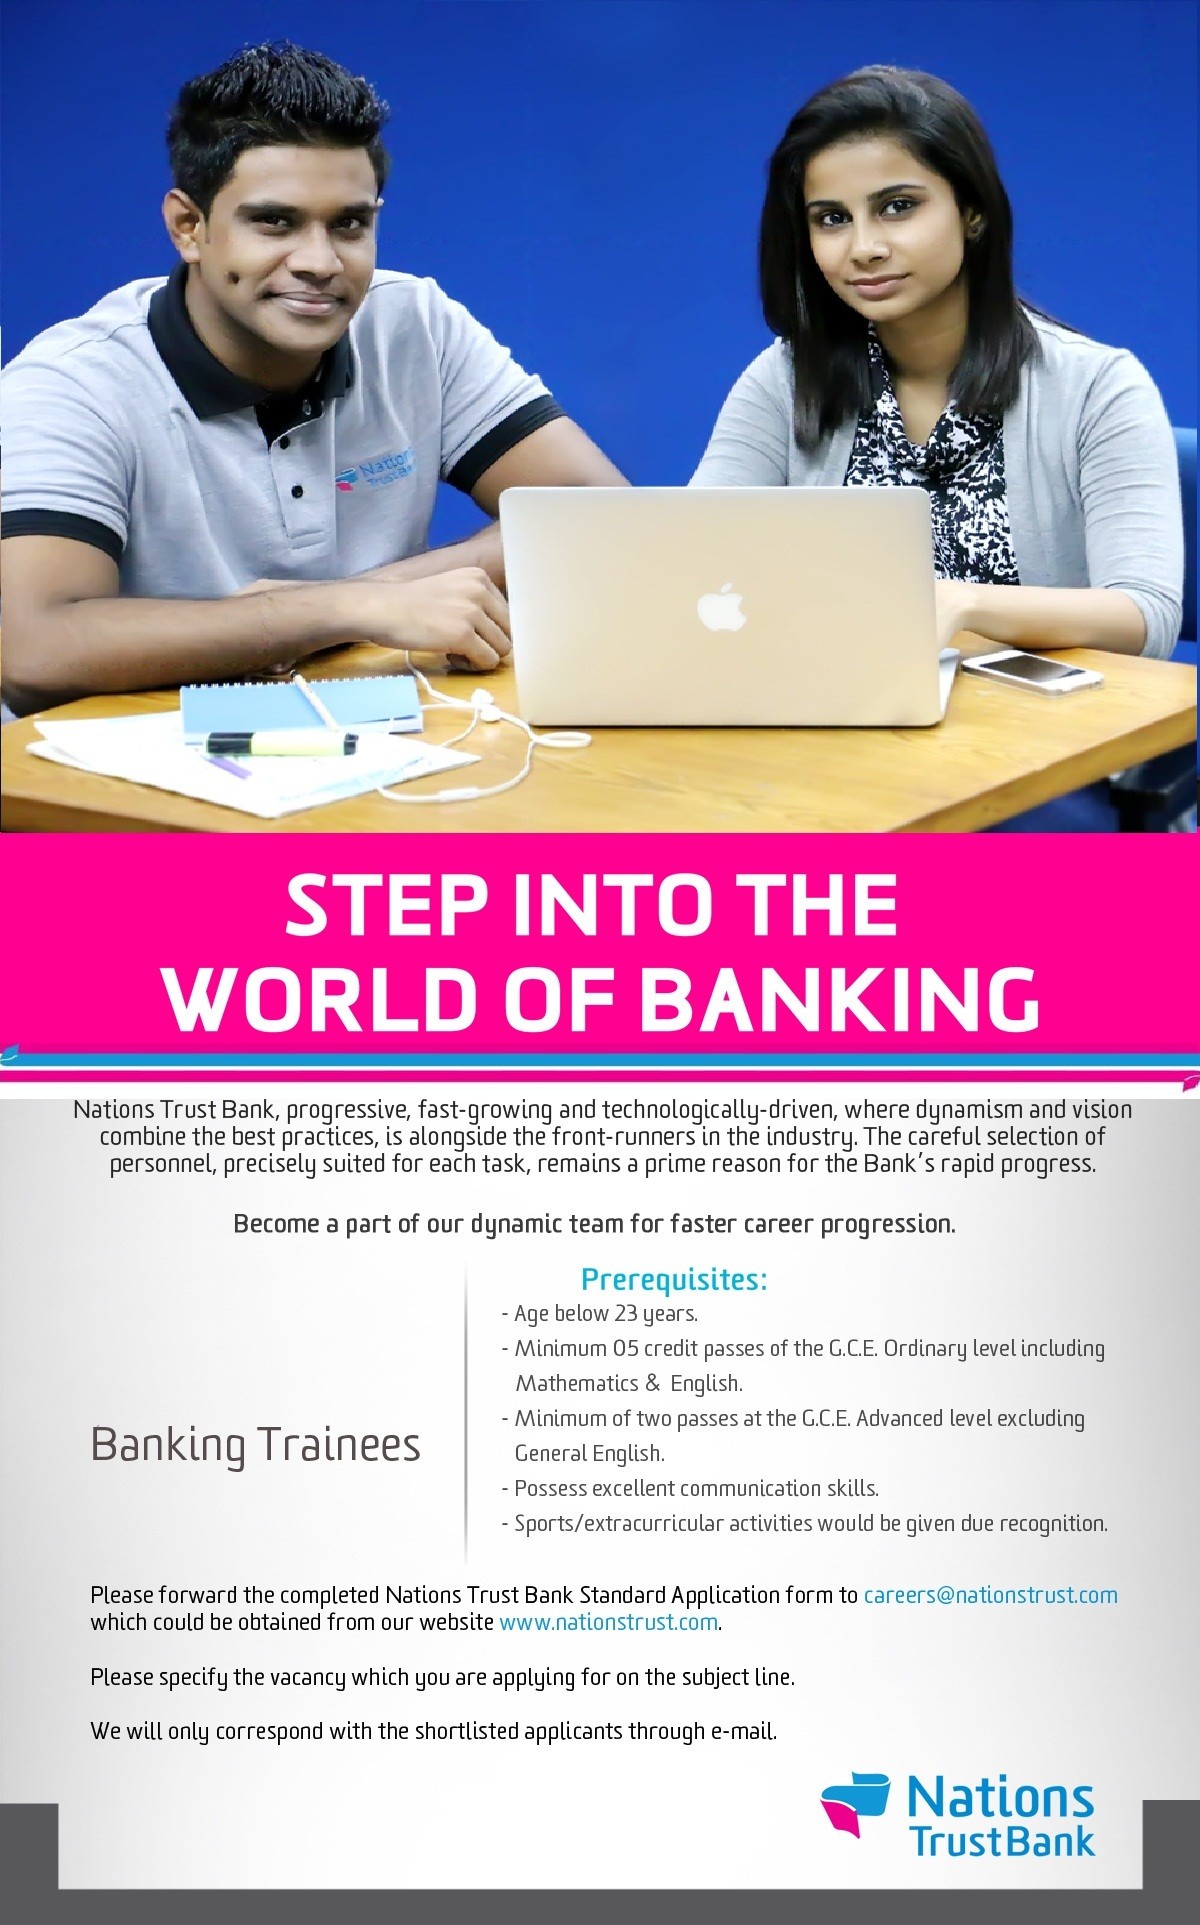 Trainee Banking Assistant Vacancies - Nations Trust Bank Jobs Vacancies Details